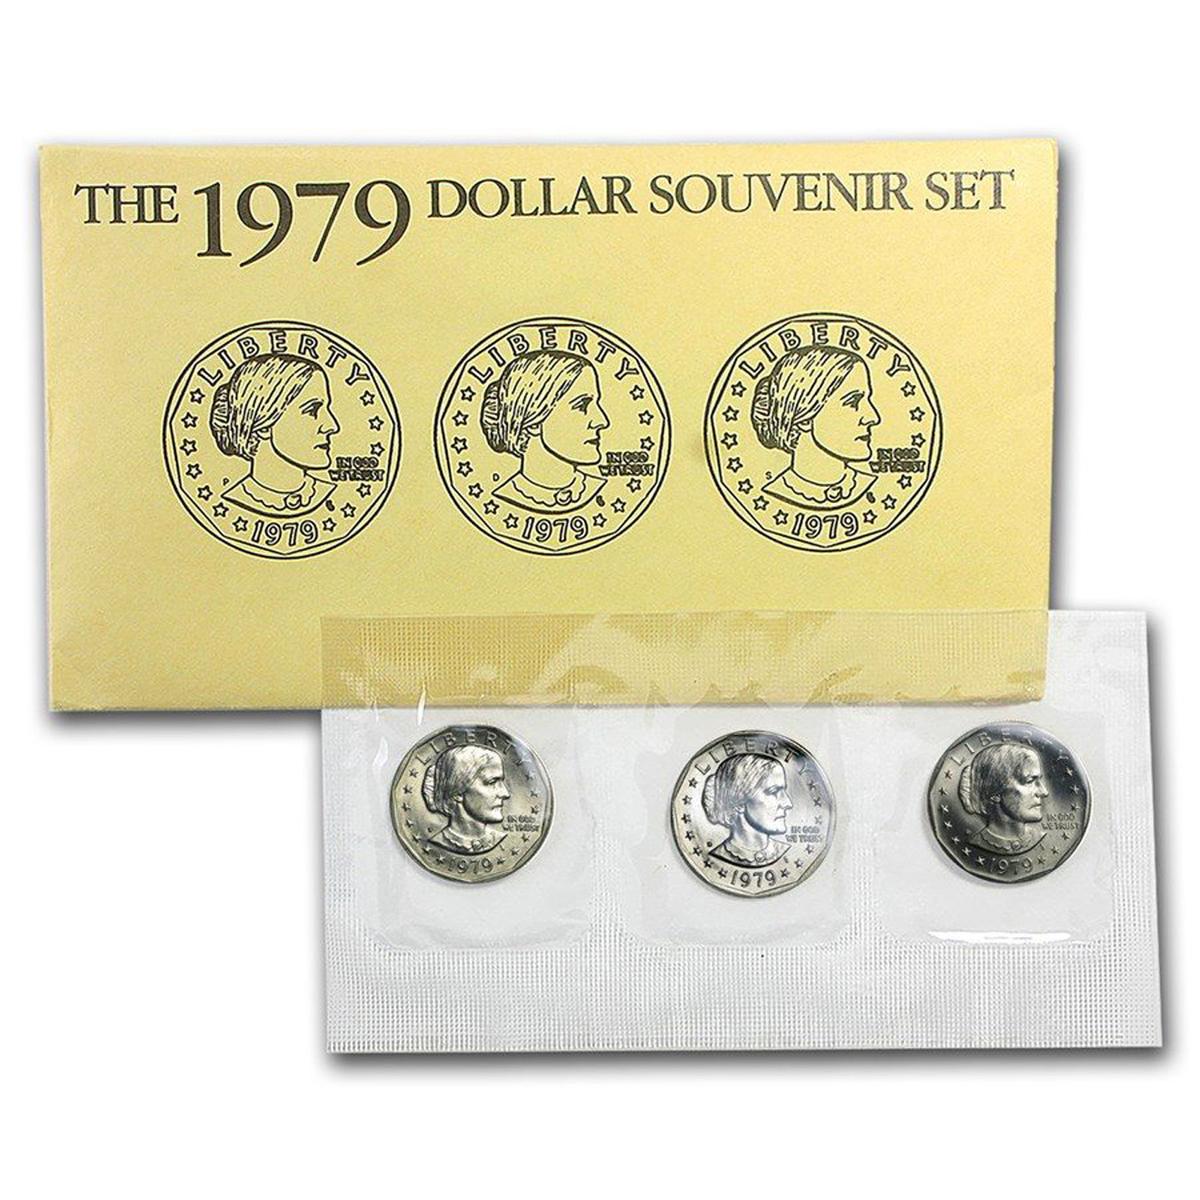 1979 Uncirculated 3-Coin Souvenir Susan B Anthony Dollar Set in Original Packaging